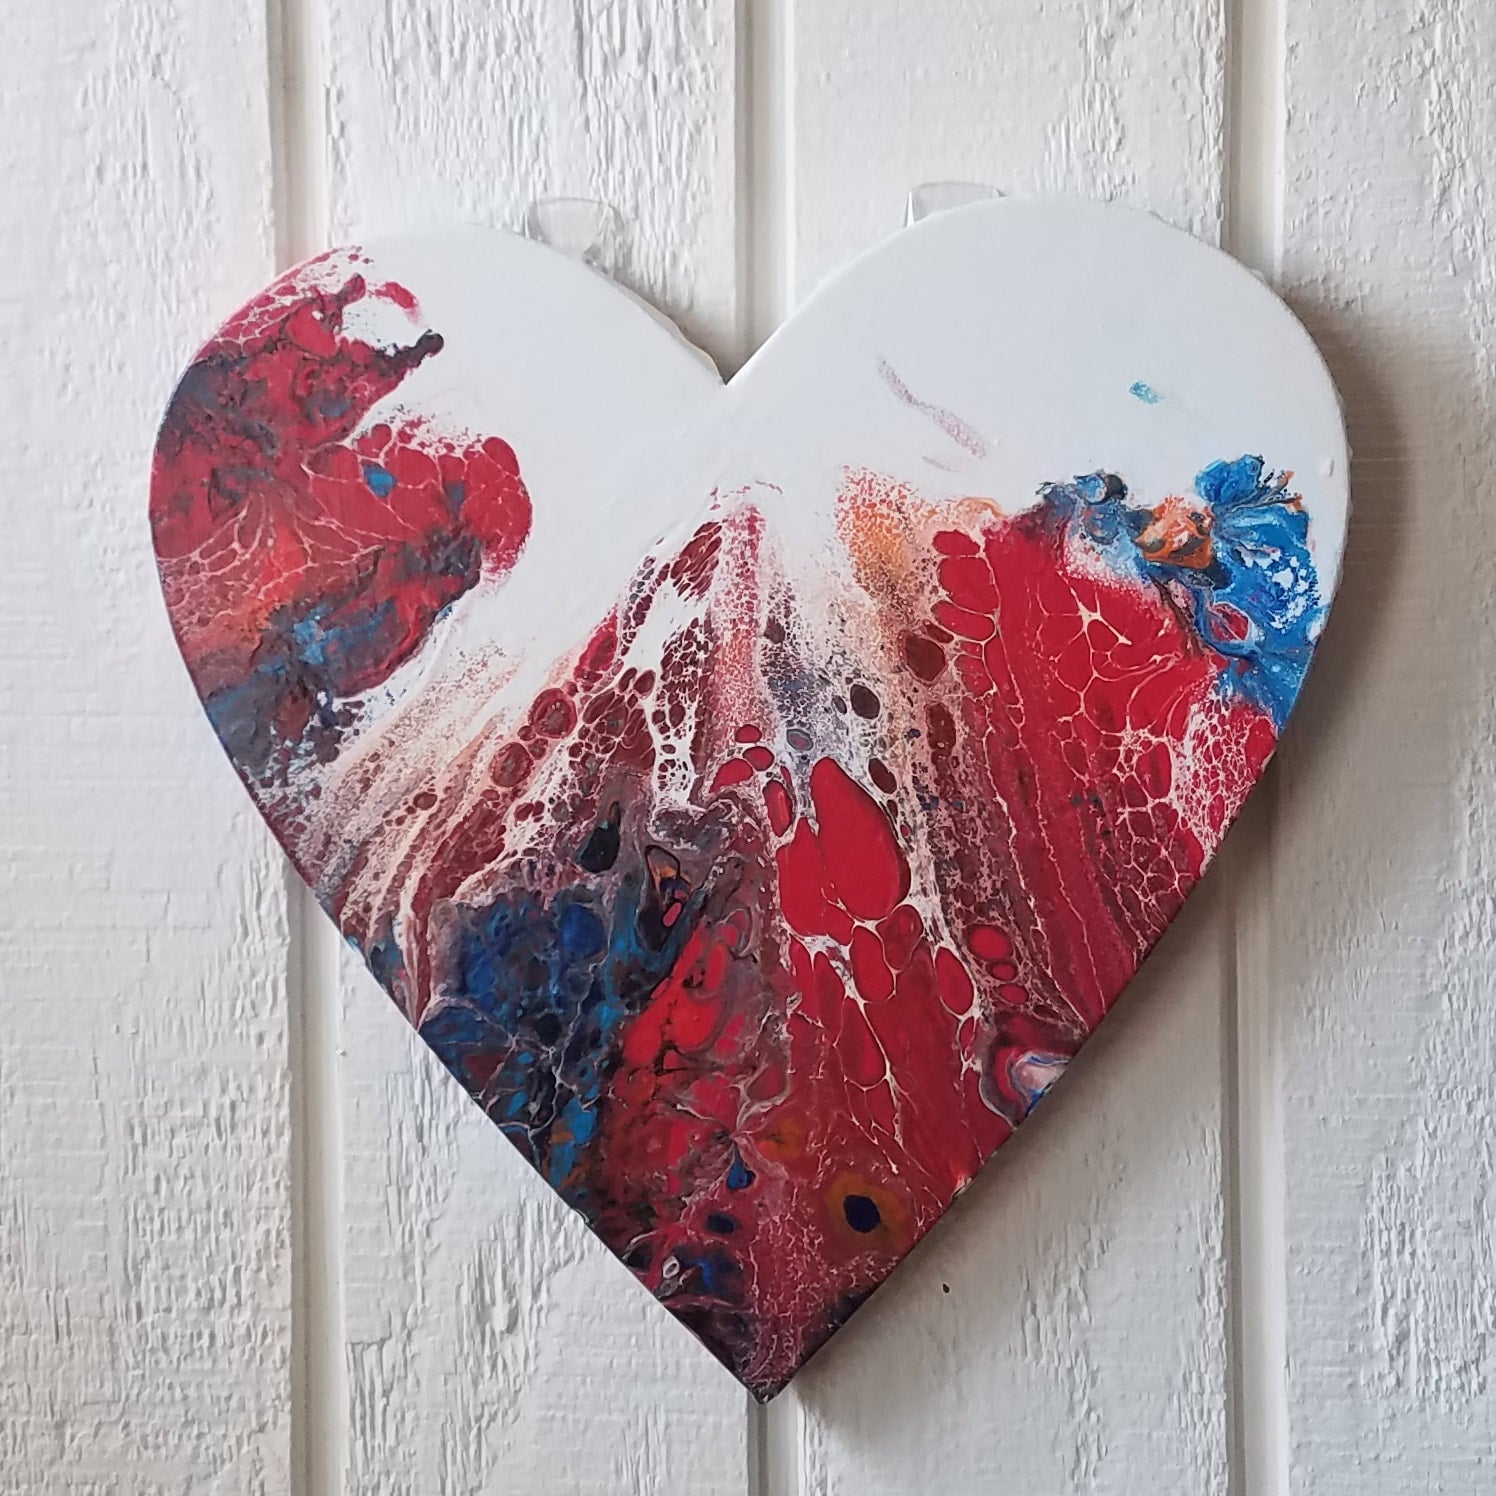 A-112- 10x10- heart-shaped canvas